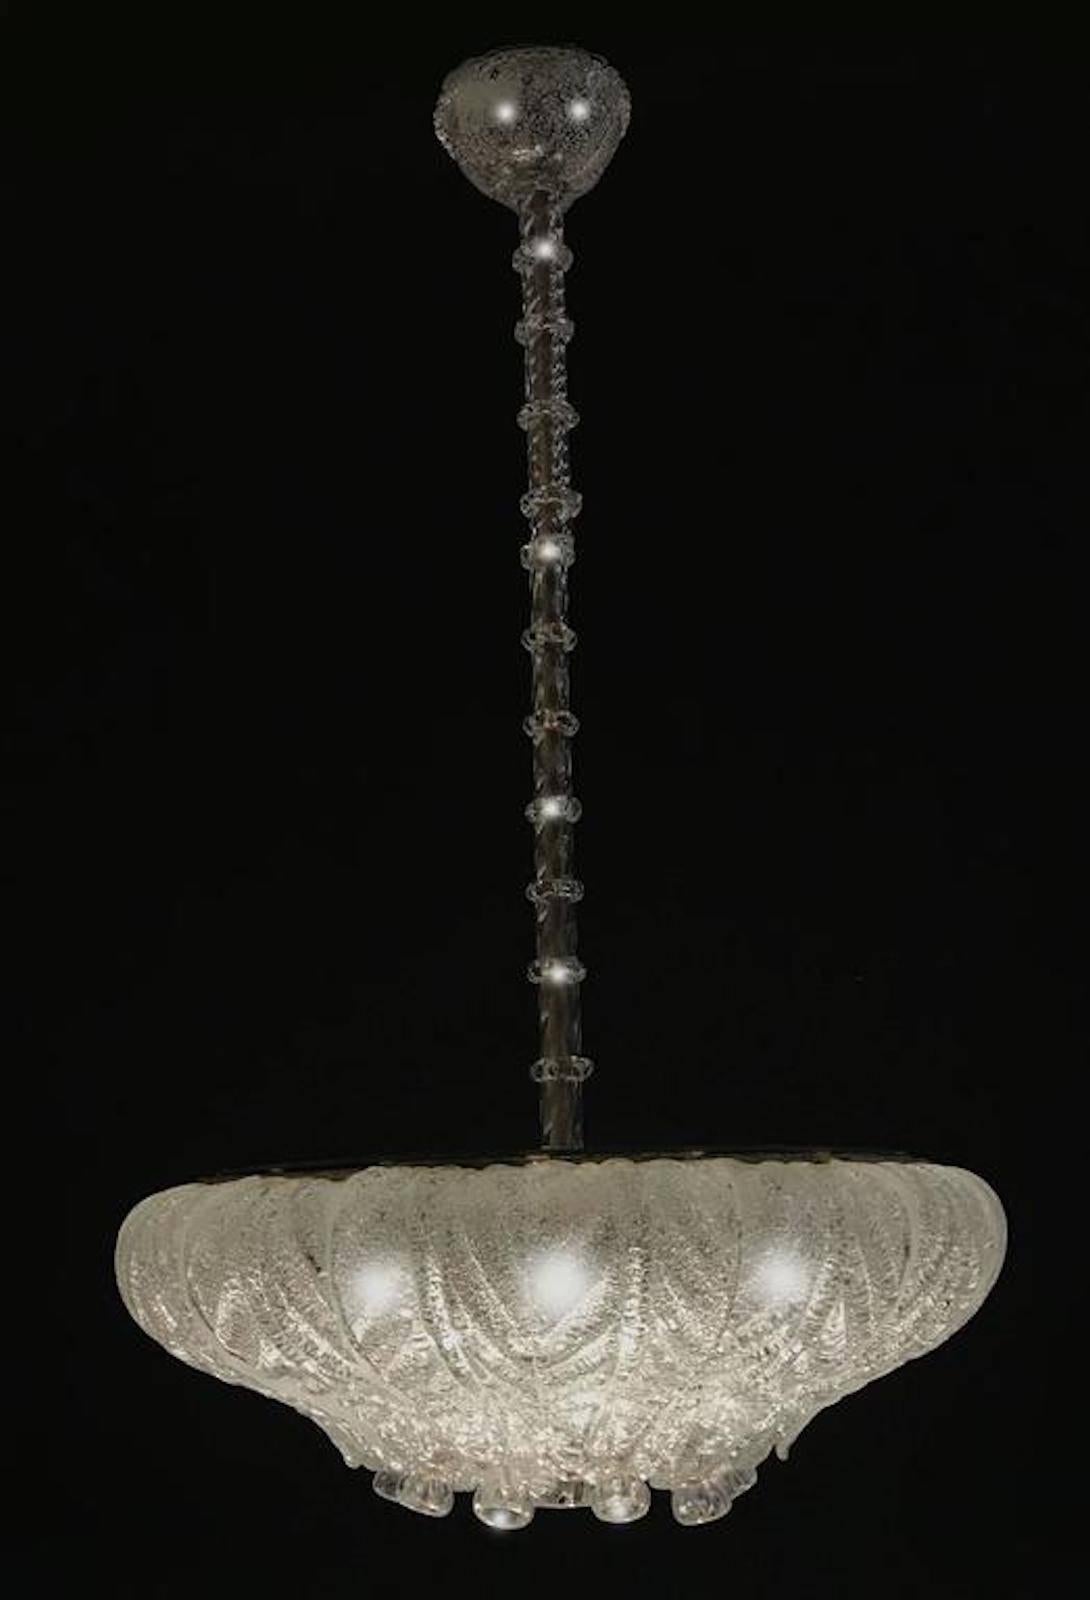 Stunning Barovier & Toso chandelier. Piece of refined elegance.